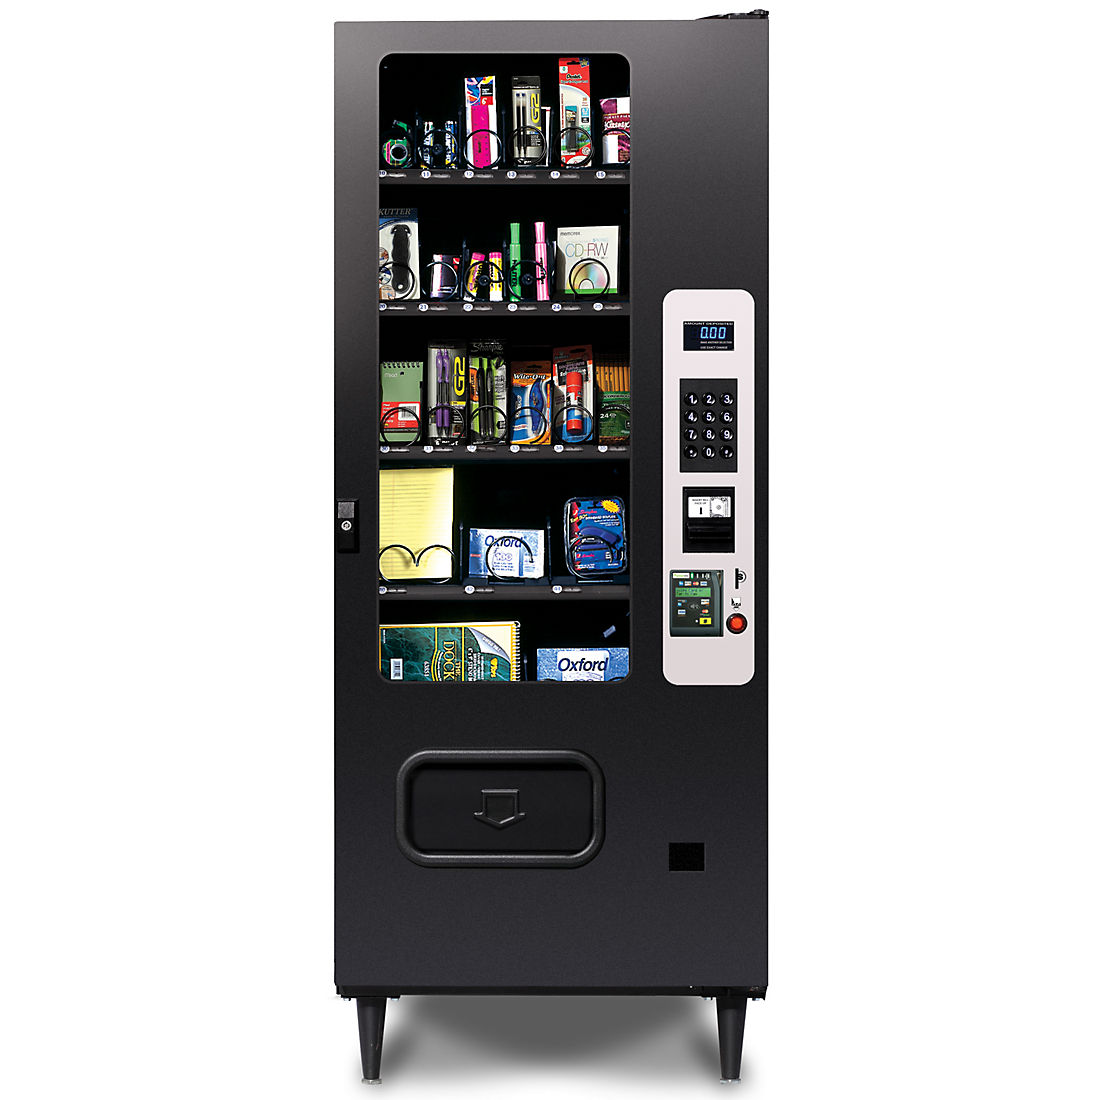 vending machine supplies